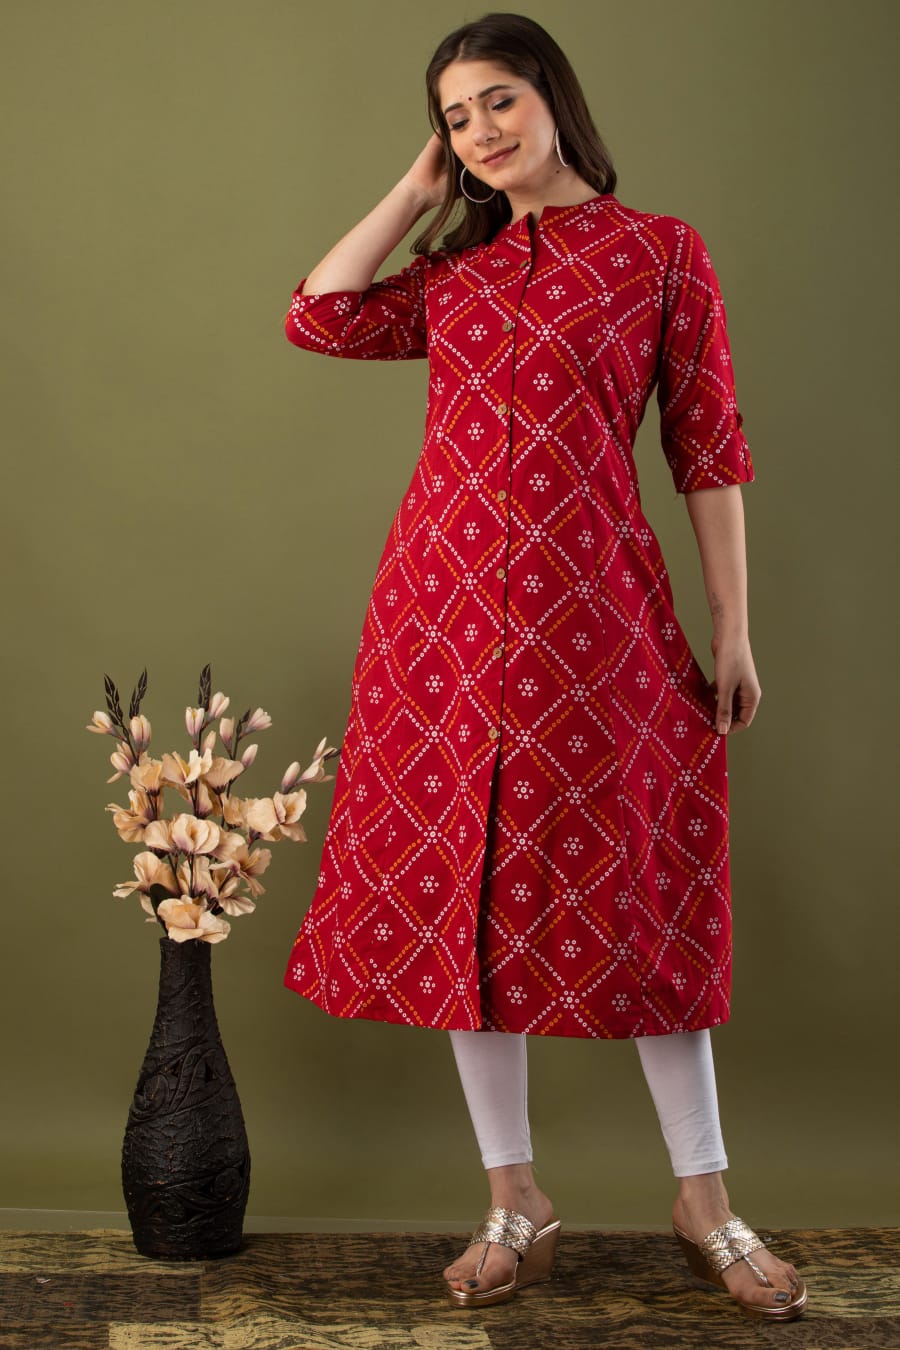 Shop Printed Ethnic Wear & Dresses From Anokhi | LBB, Delhi